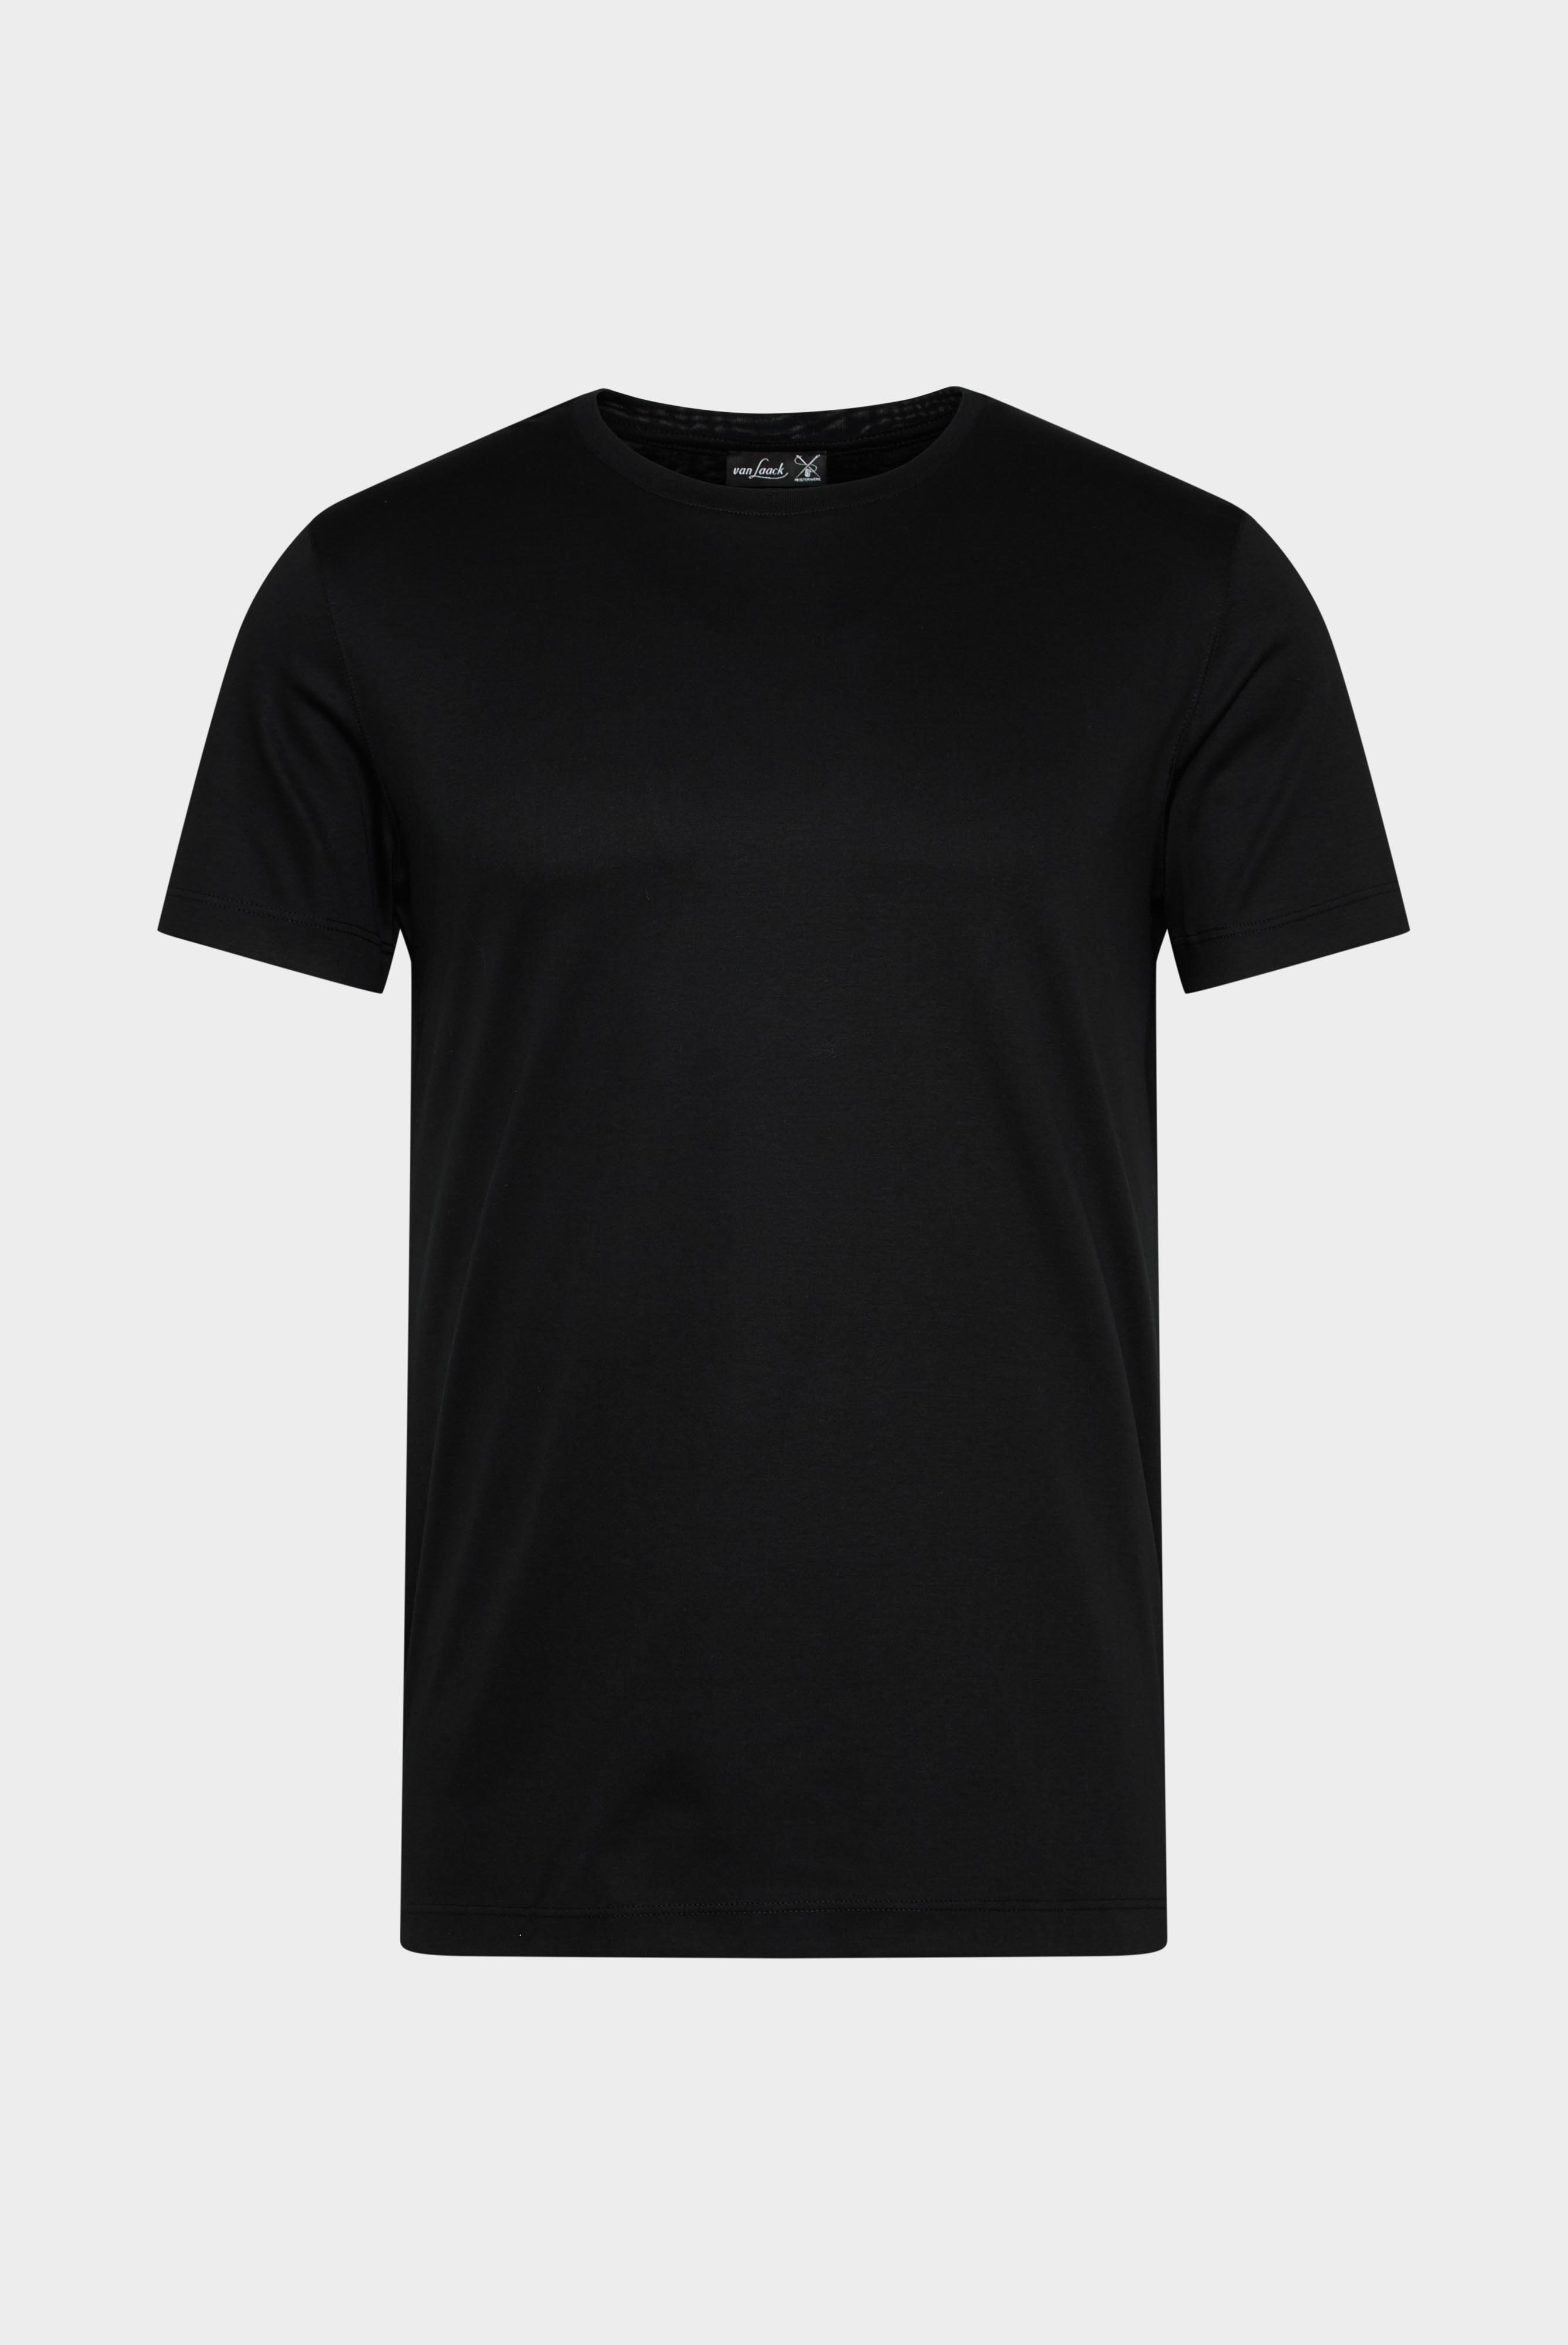 T-Shirts+Swiss Cotton Jersey Crew Neck T-Shirt+20.1717.UX.180031.099.L